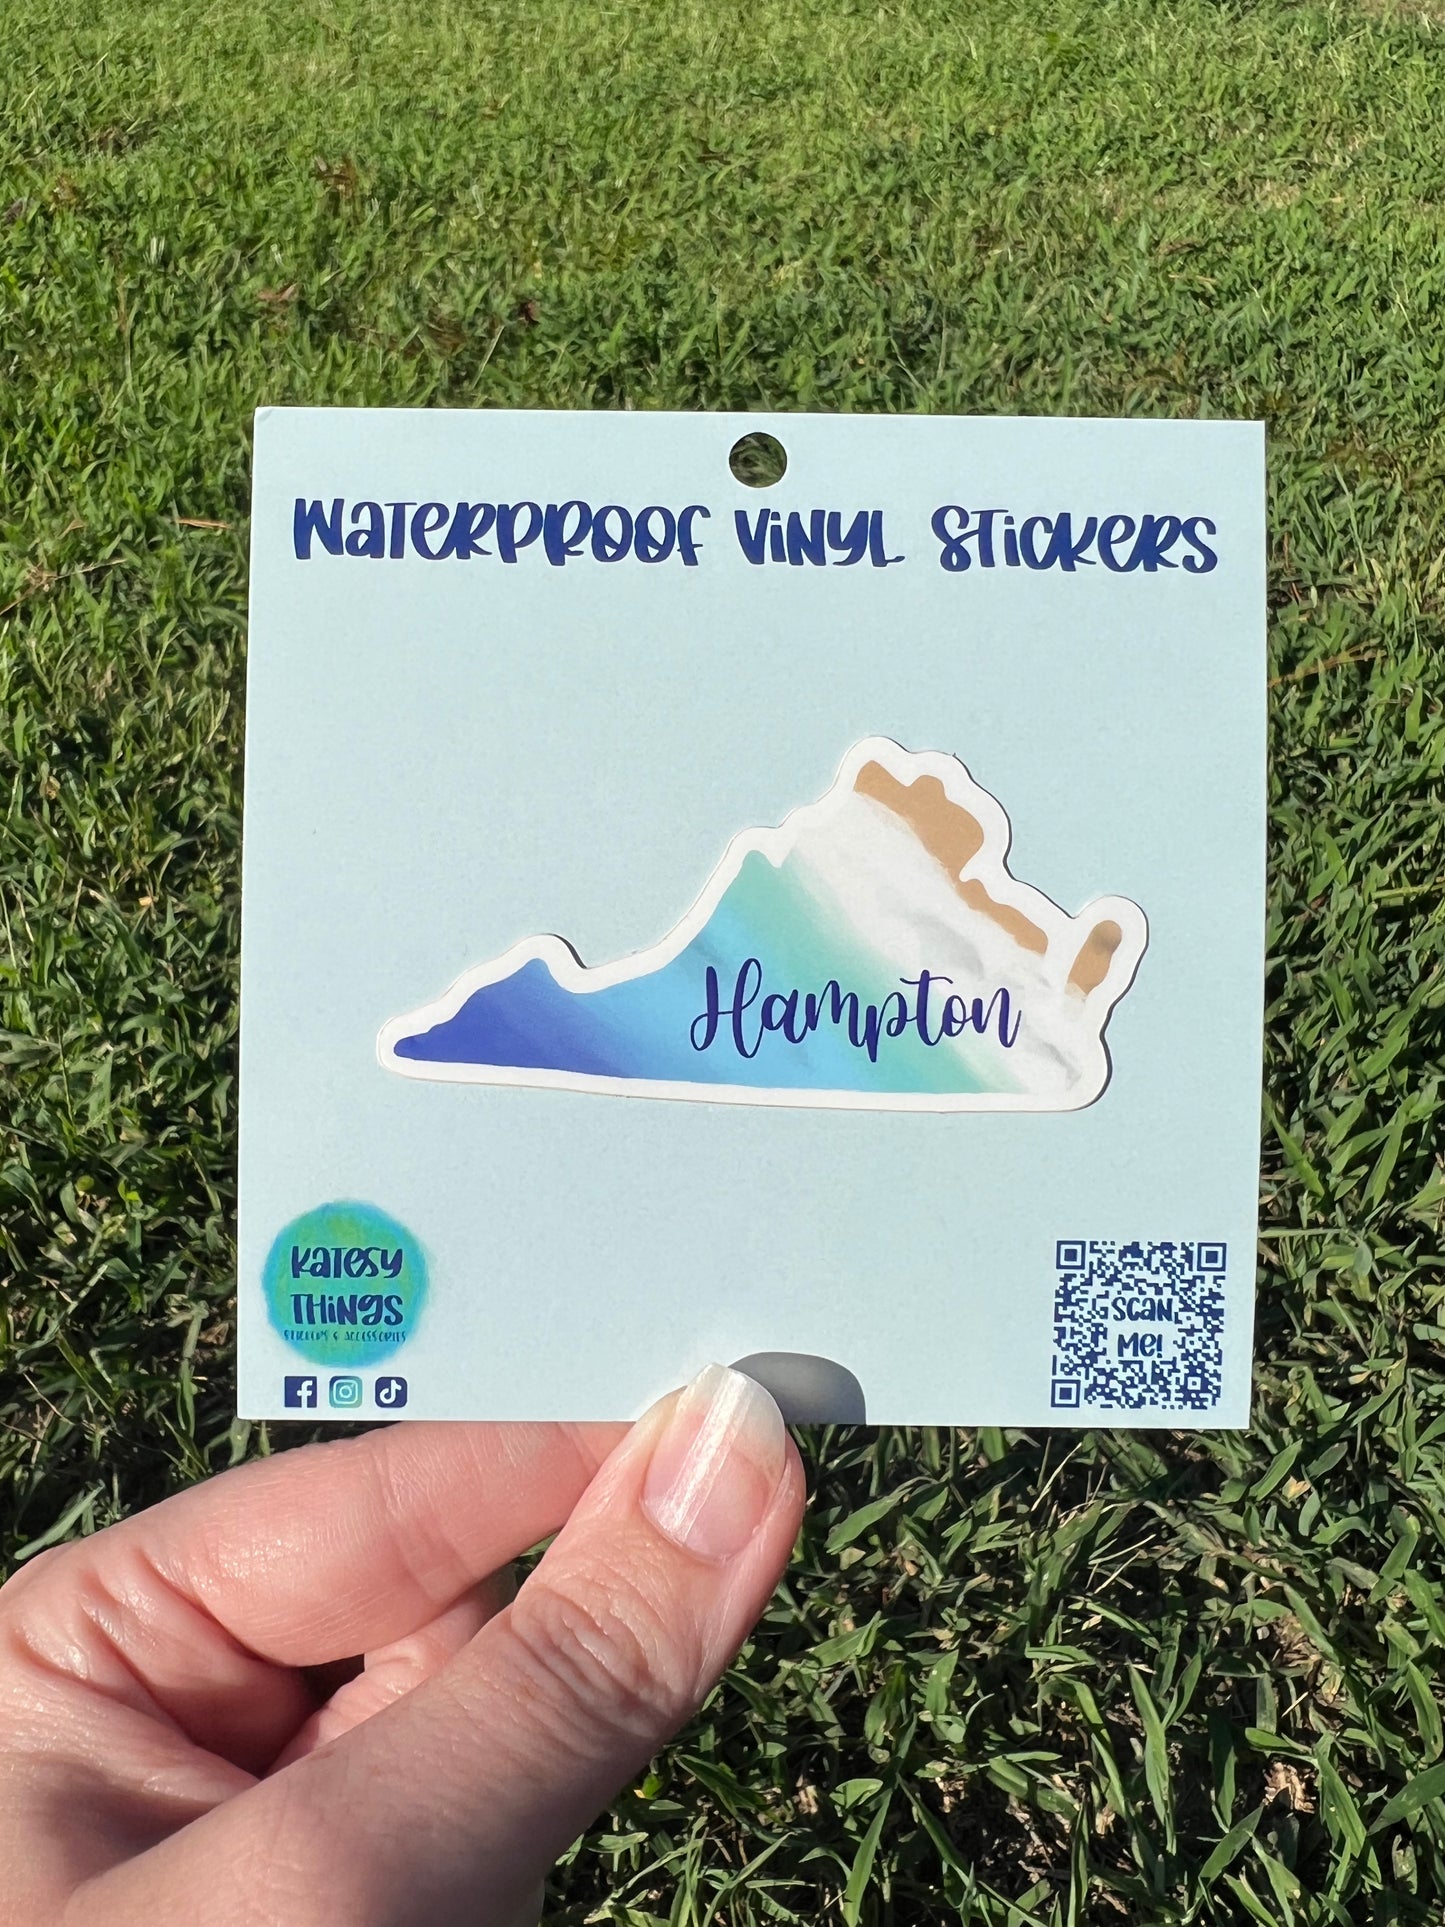 Hampton, Virginia - Beach Scene Vinyl Sticker